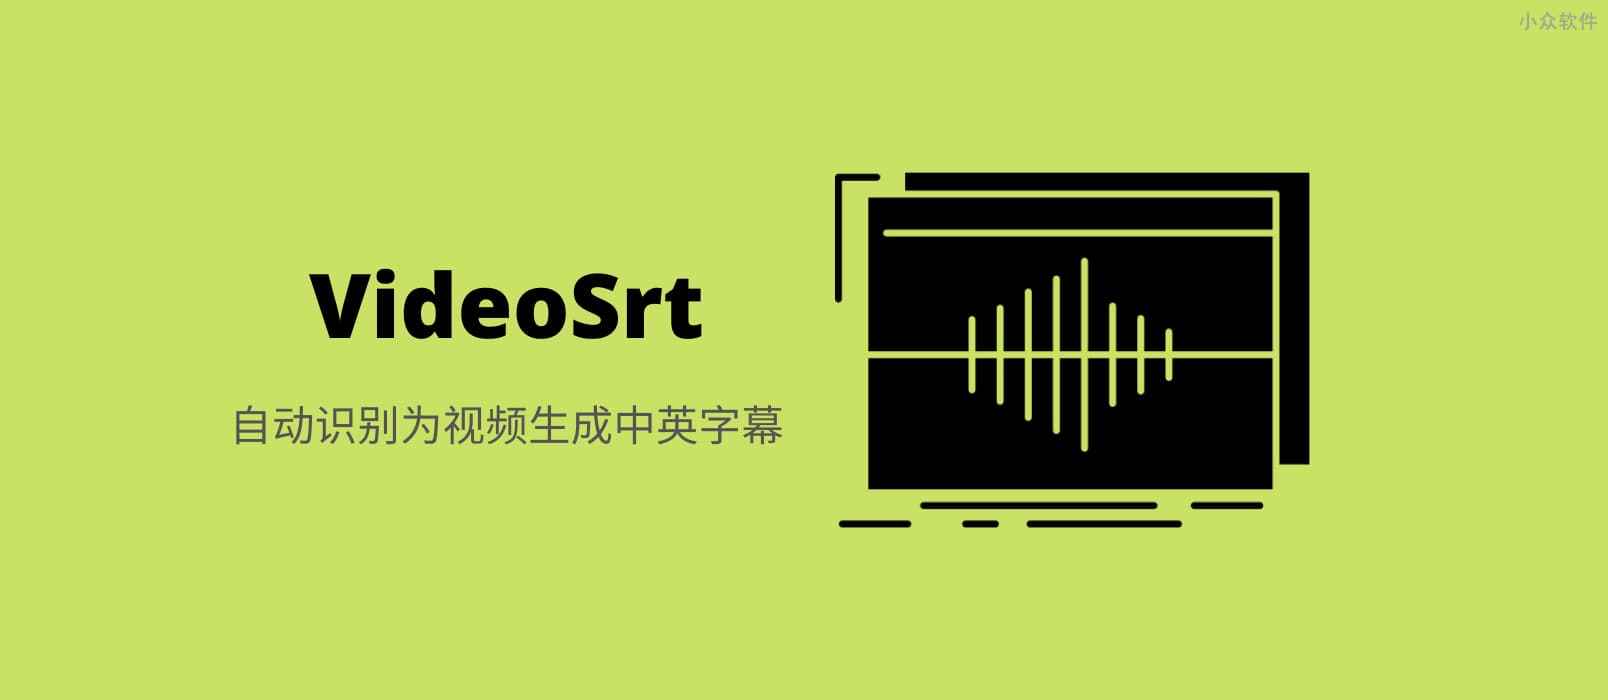 VideoSrt – 自动识别,为视频生成中英字幕[Win 开源]